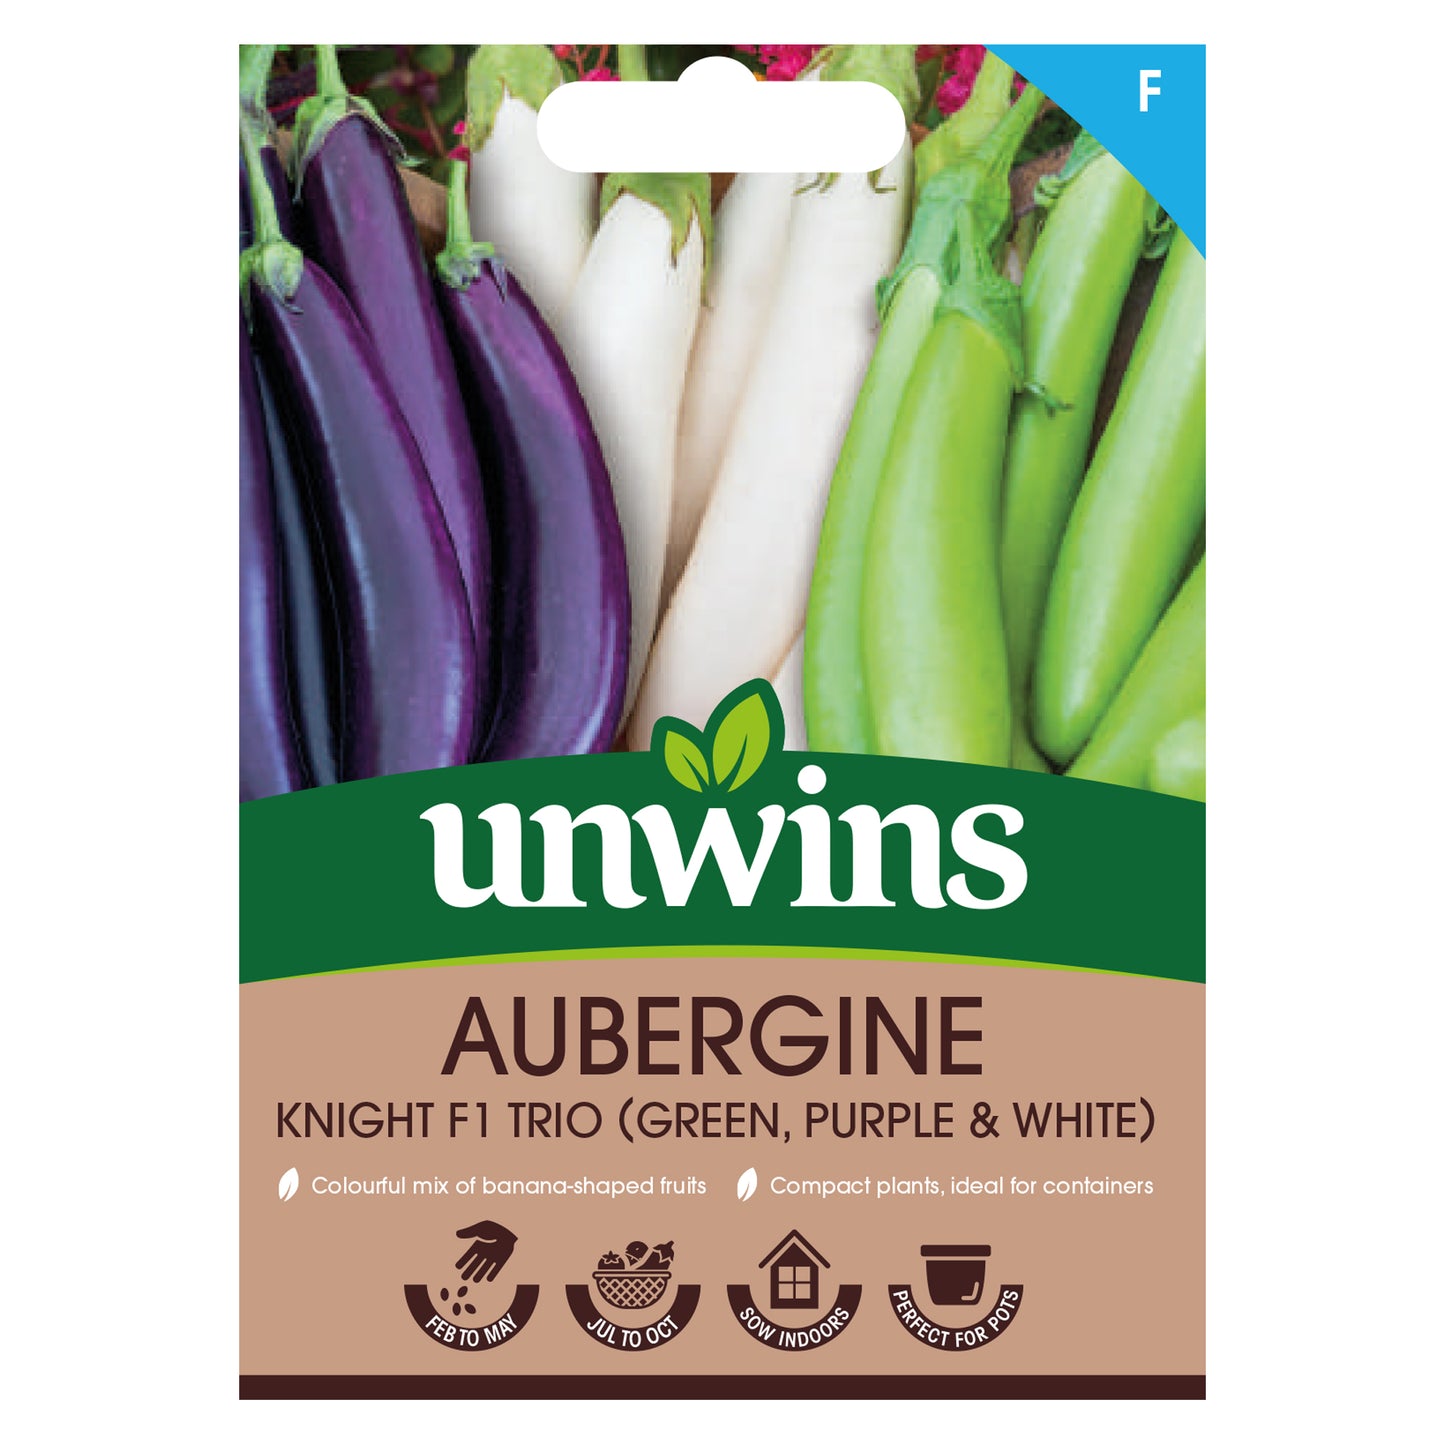 Unwins Aubergine Knight F1 Trio (Green, Purple & White) Seeds Front